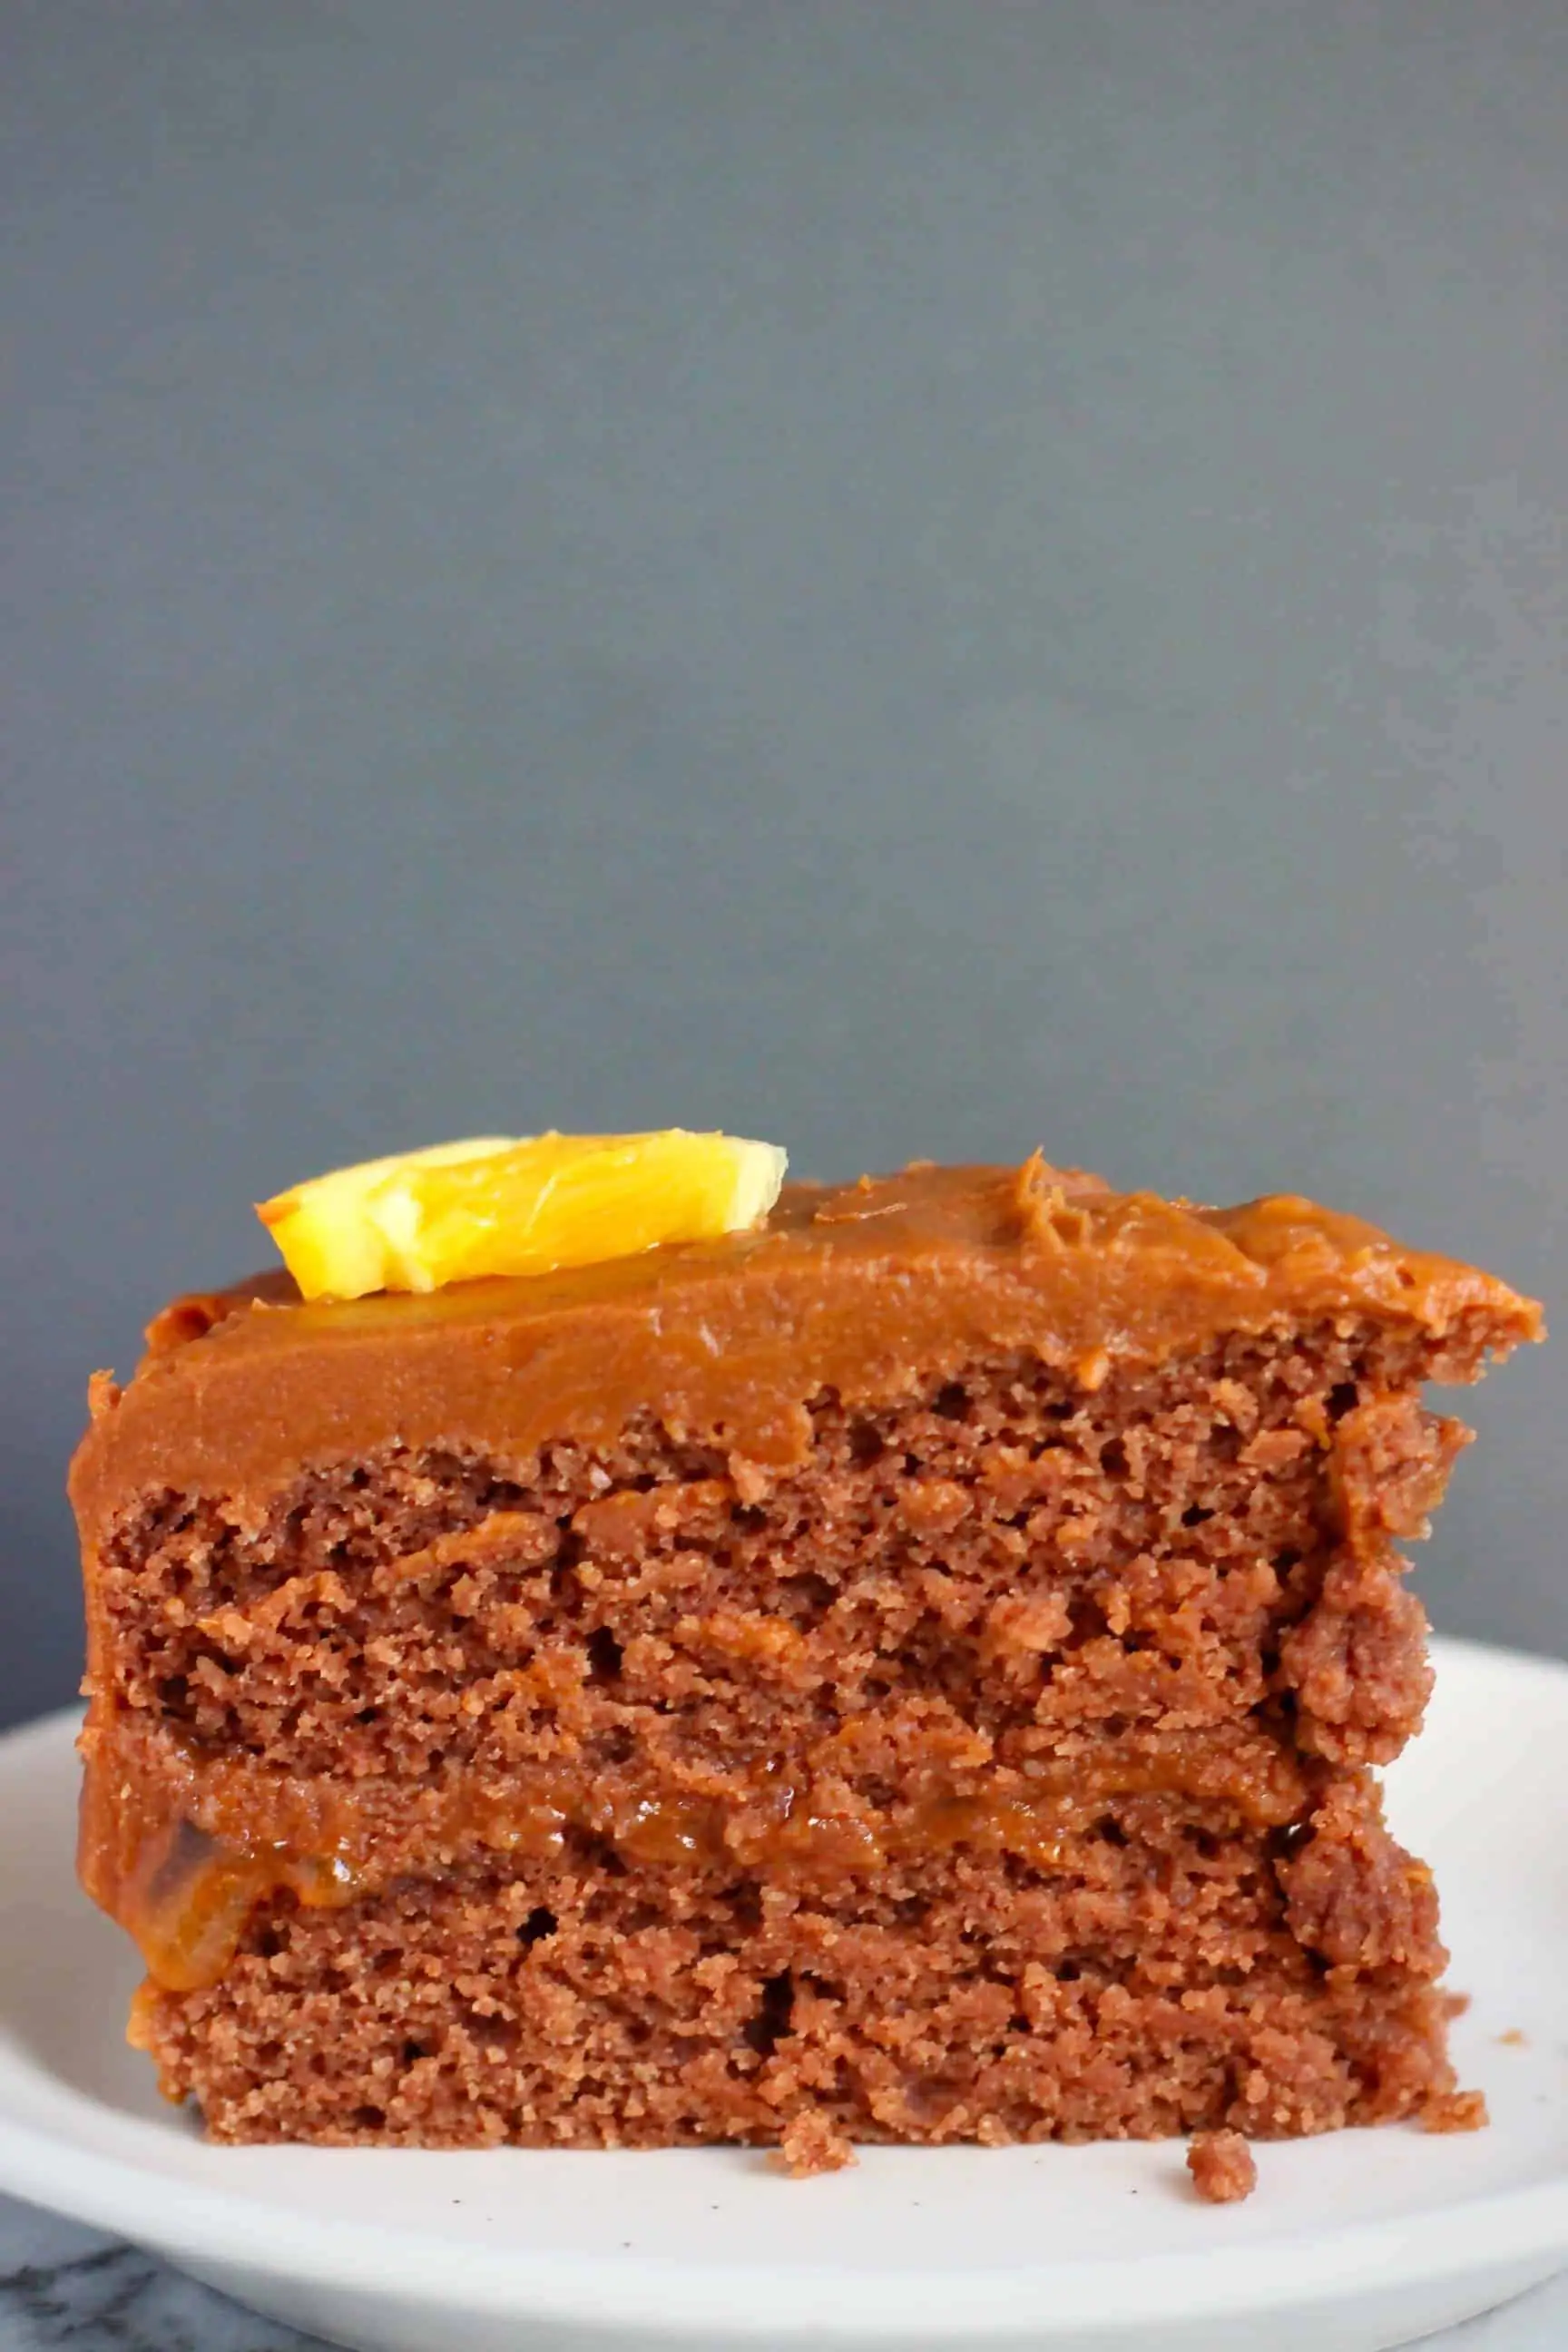 A slice of chocolate orange sponge sandwiched with chocolate frosting topped with a slice of orange against a dark grey background